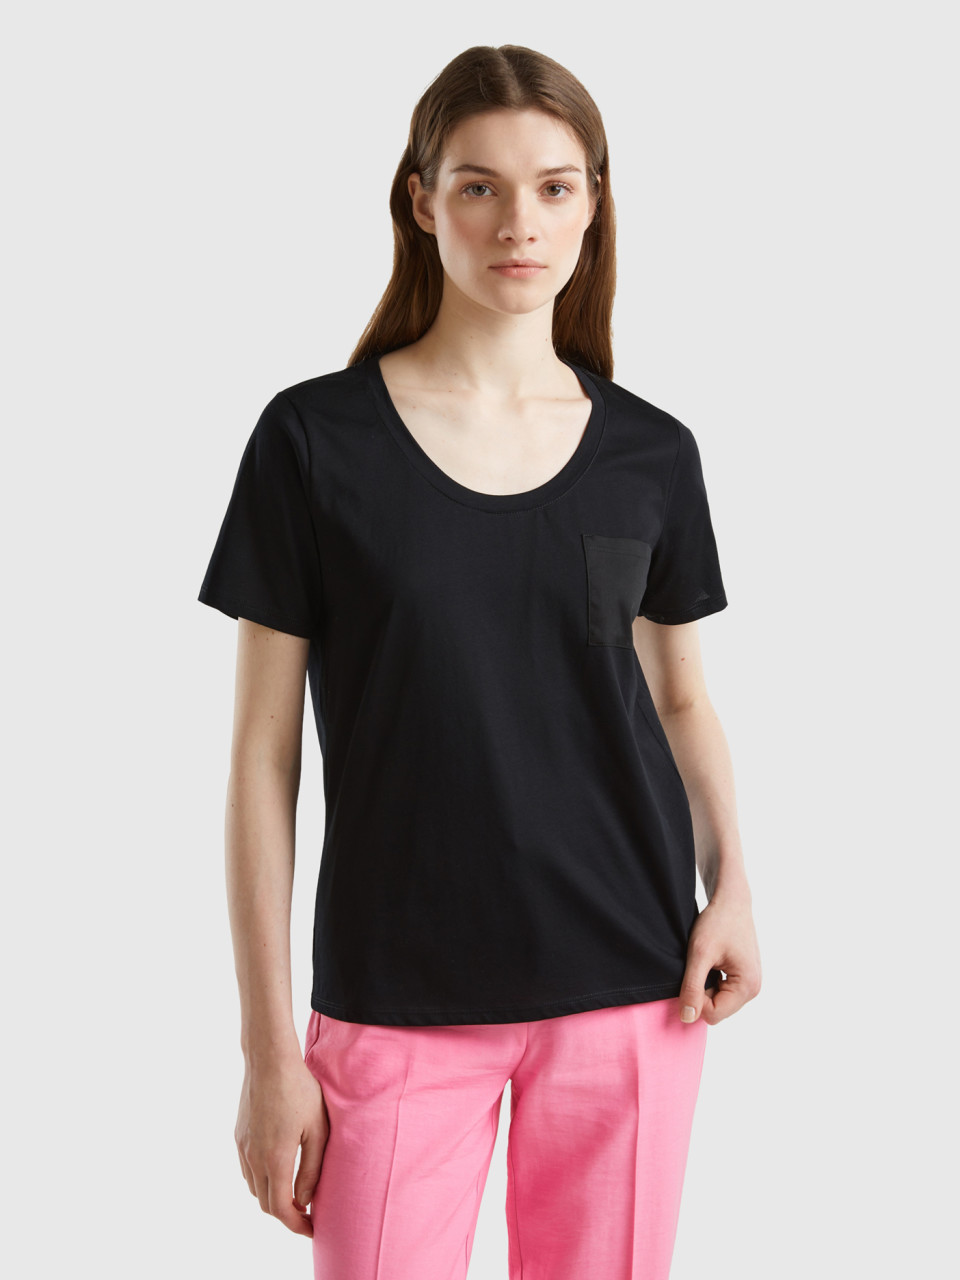 Benetton, T-shirt With Satin Pocket, Black, Women